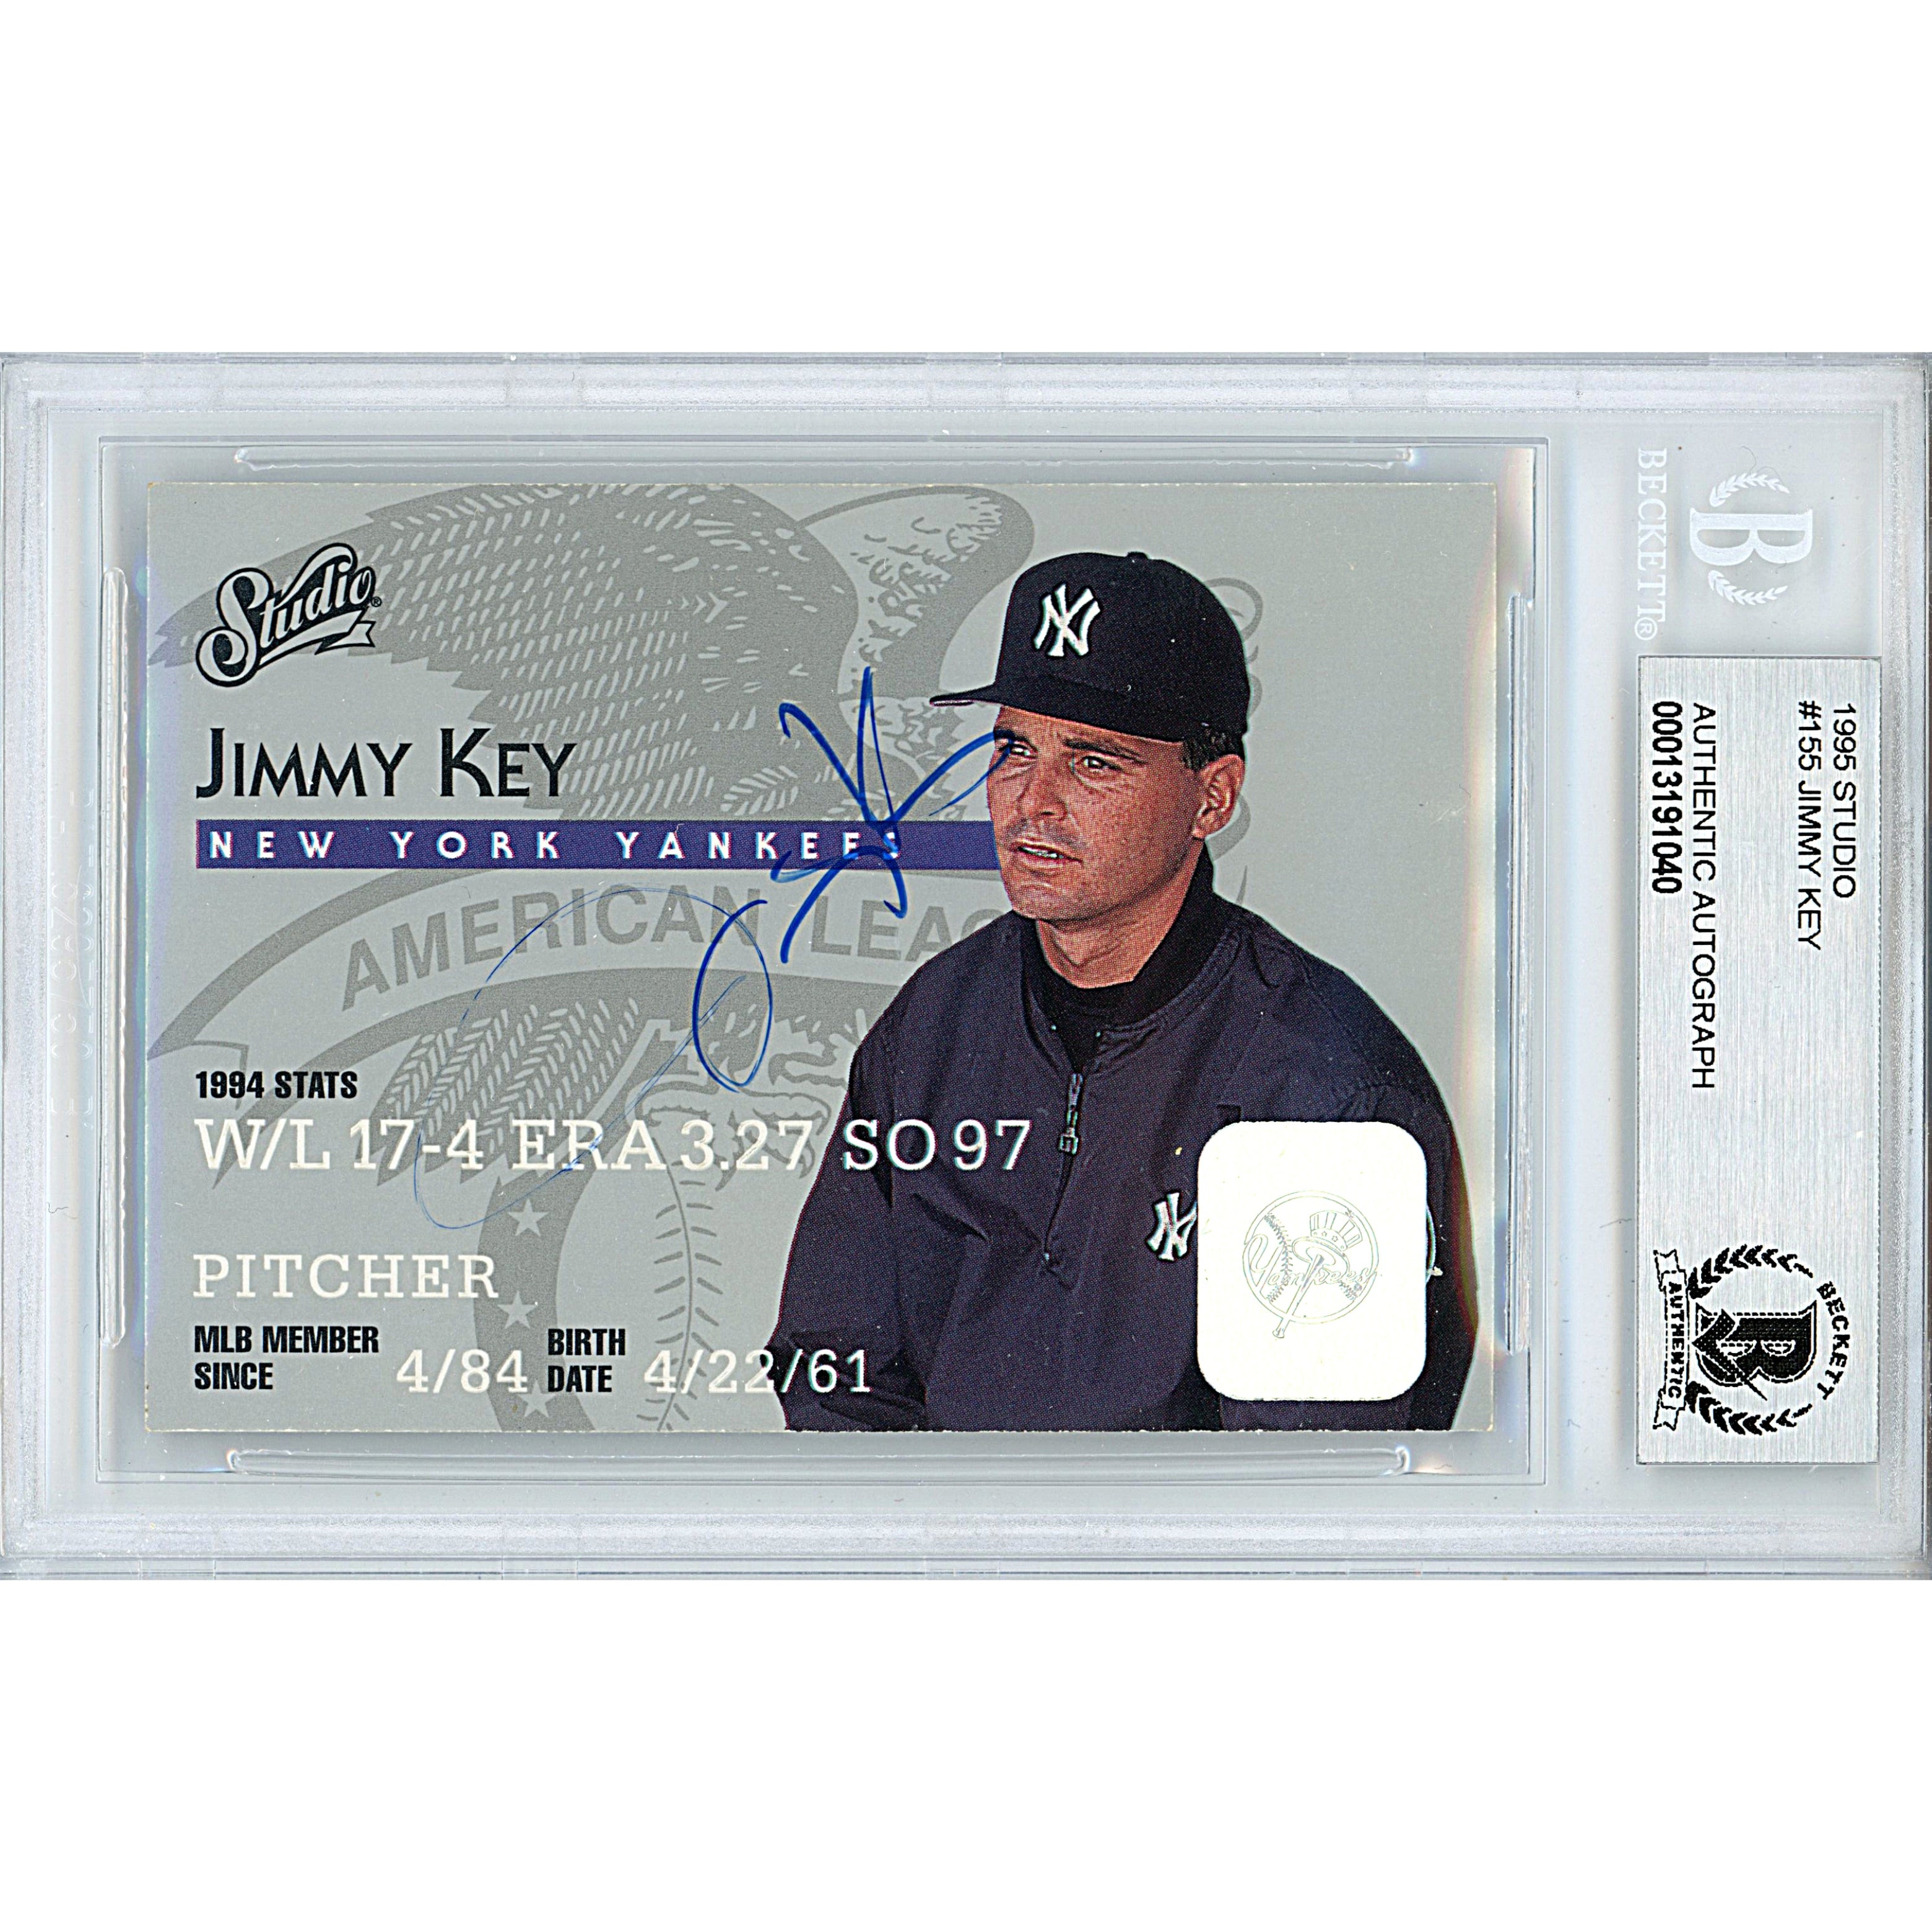 Jimmy Key - Trading/Sports Card Signed